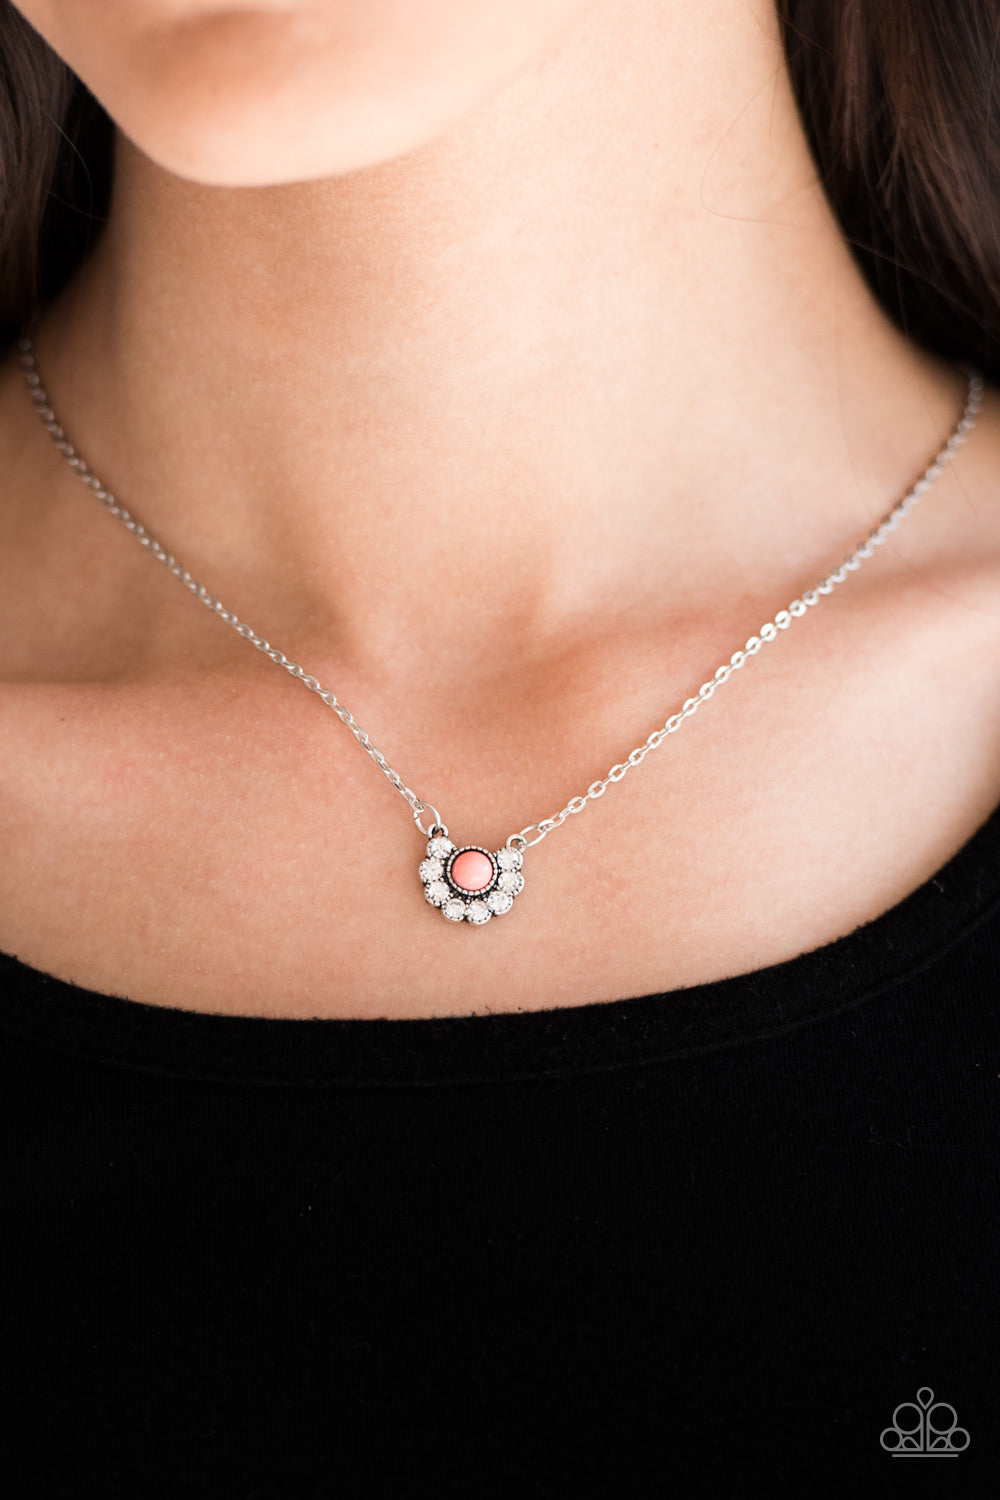 Paparazzi Pampered Princess - Orange - White Rhinestone Silver Necklace & Earrings - $5 Jewelry With Ashley Swint